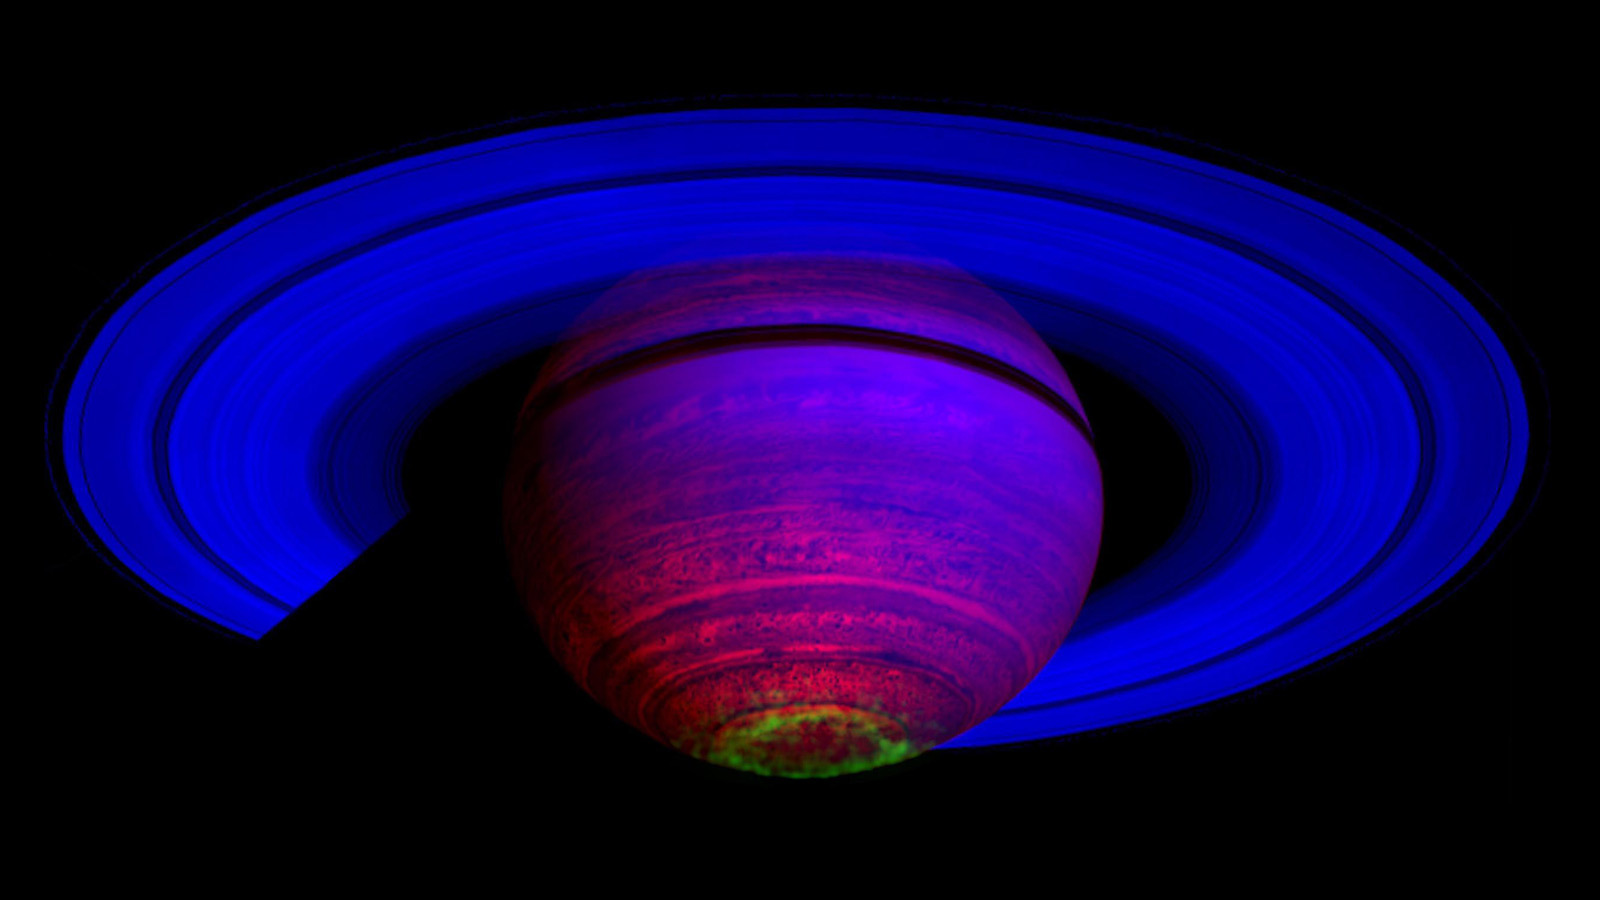 False color view of Saturn